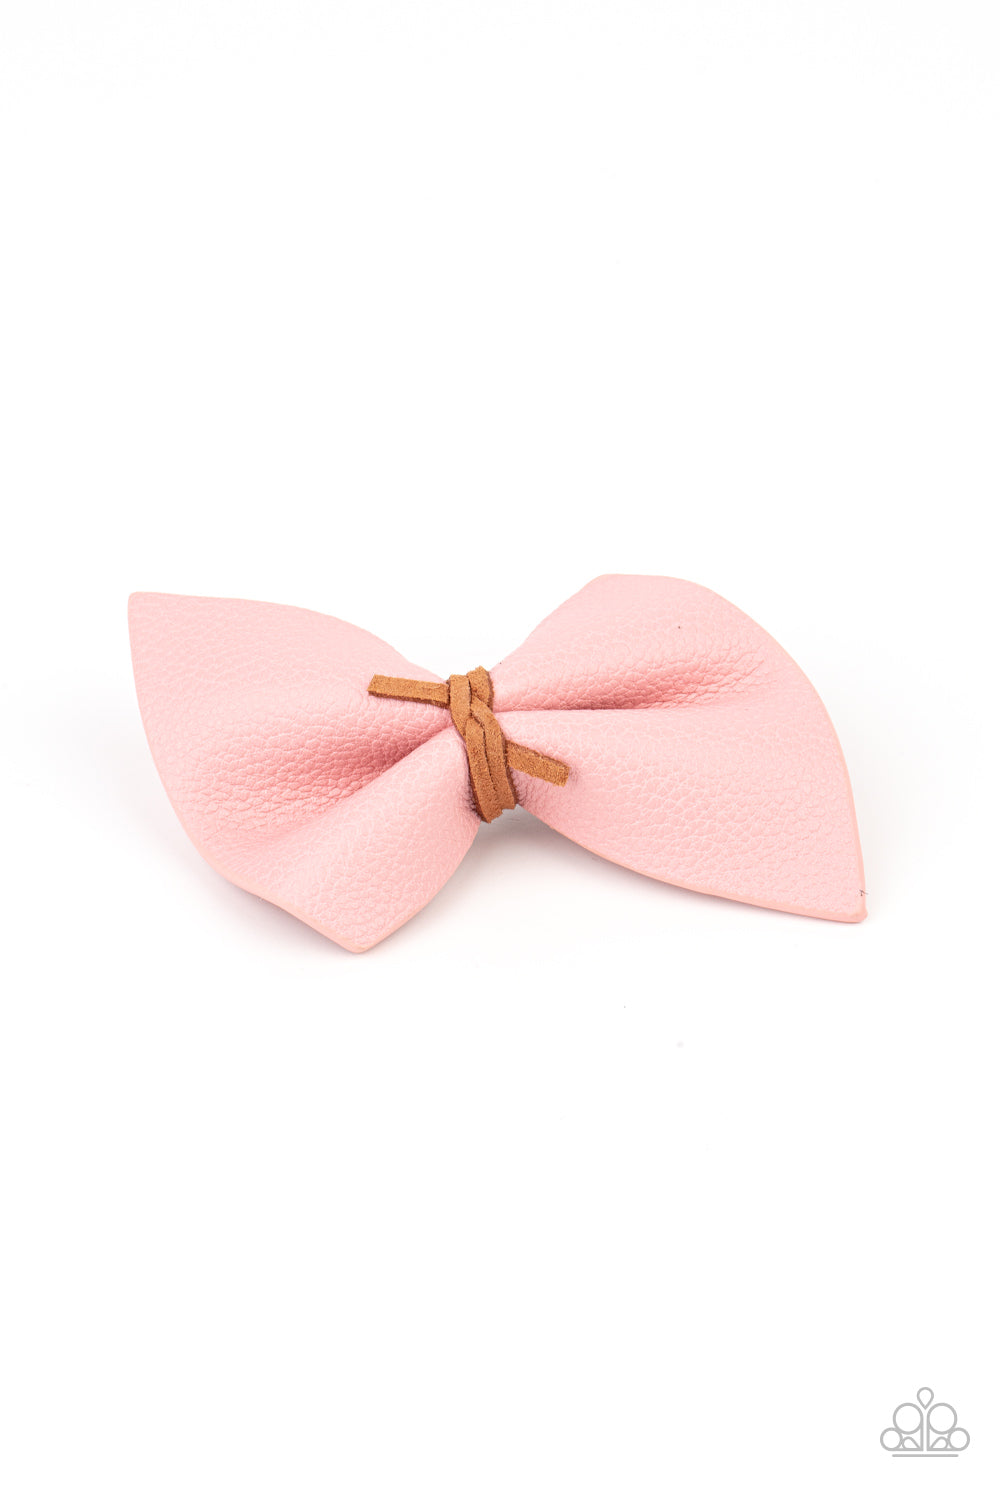 Home Sweet HOMESPUN - Pink Hair Clip - Paparazzi Accessories